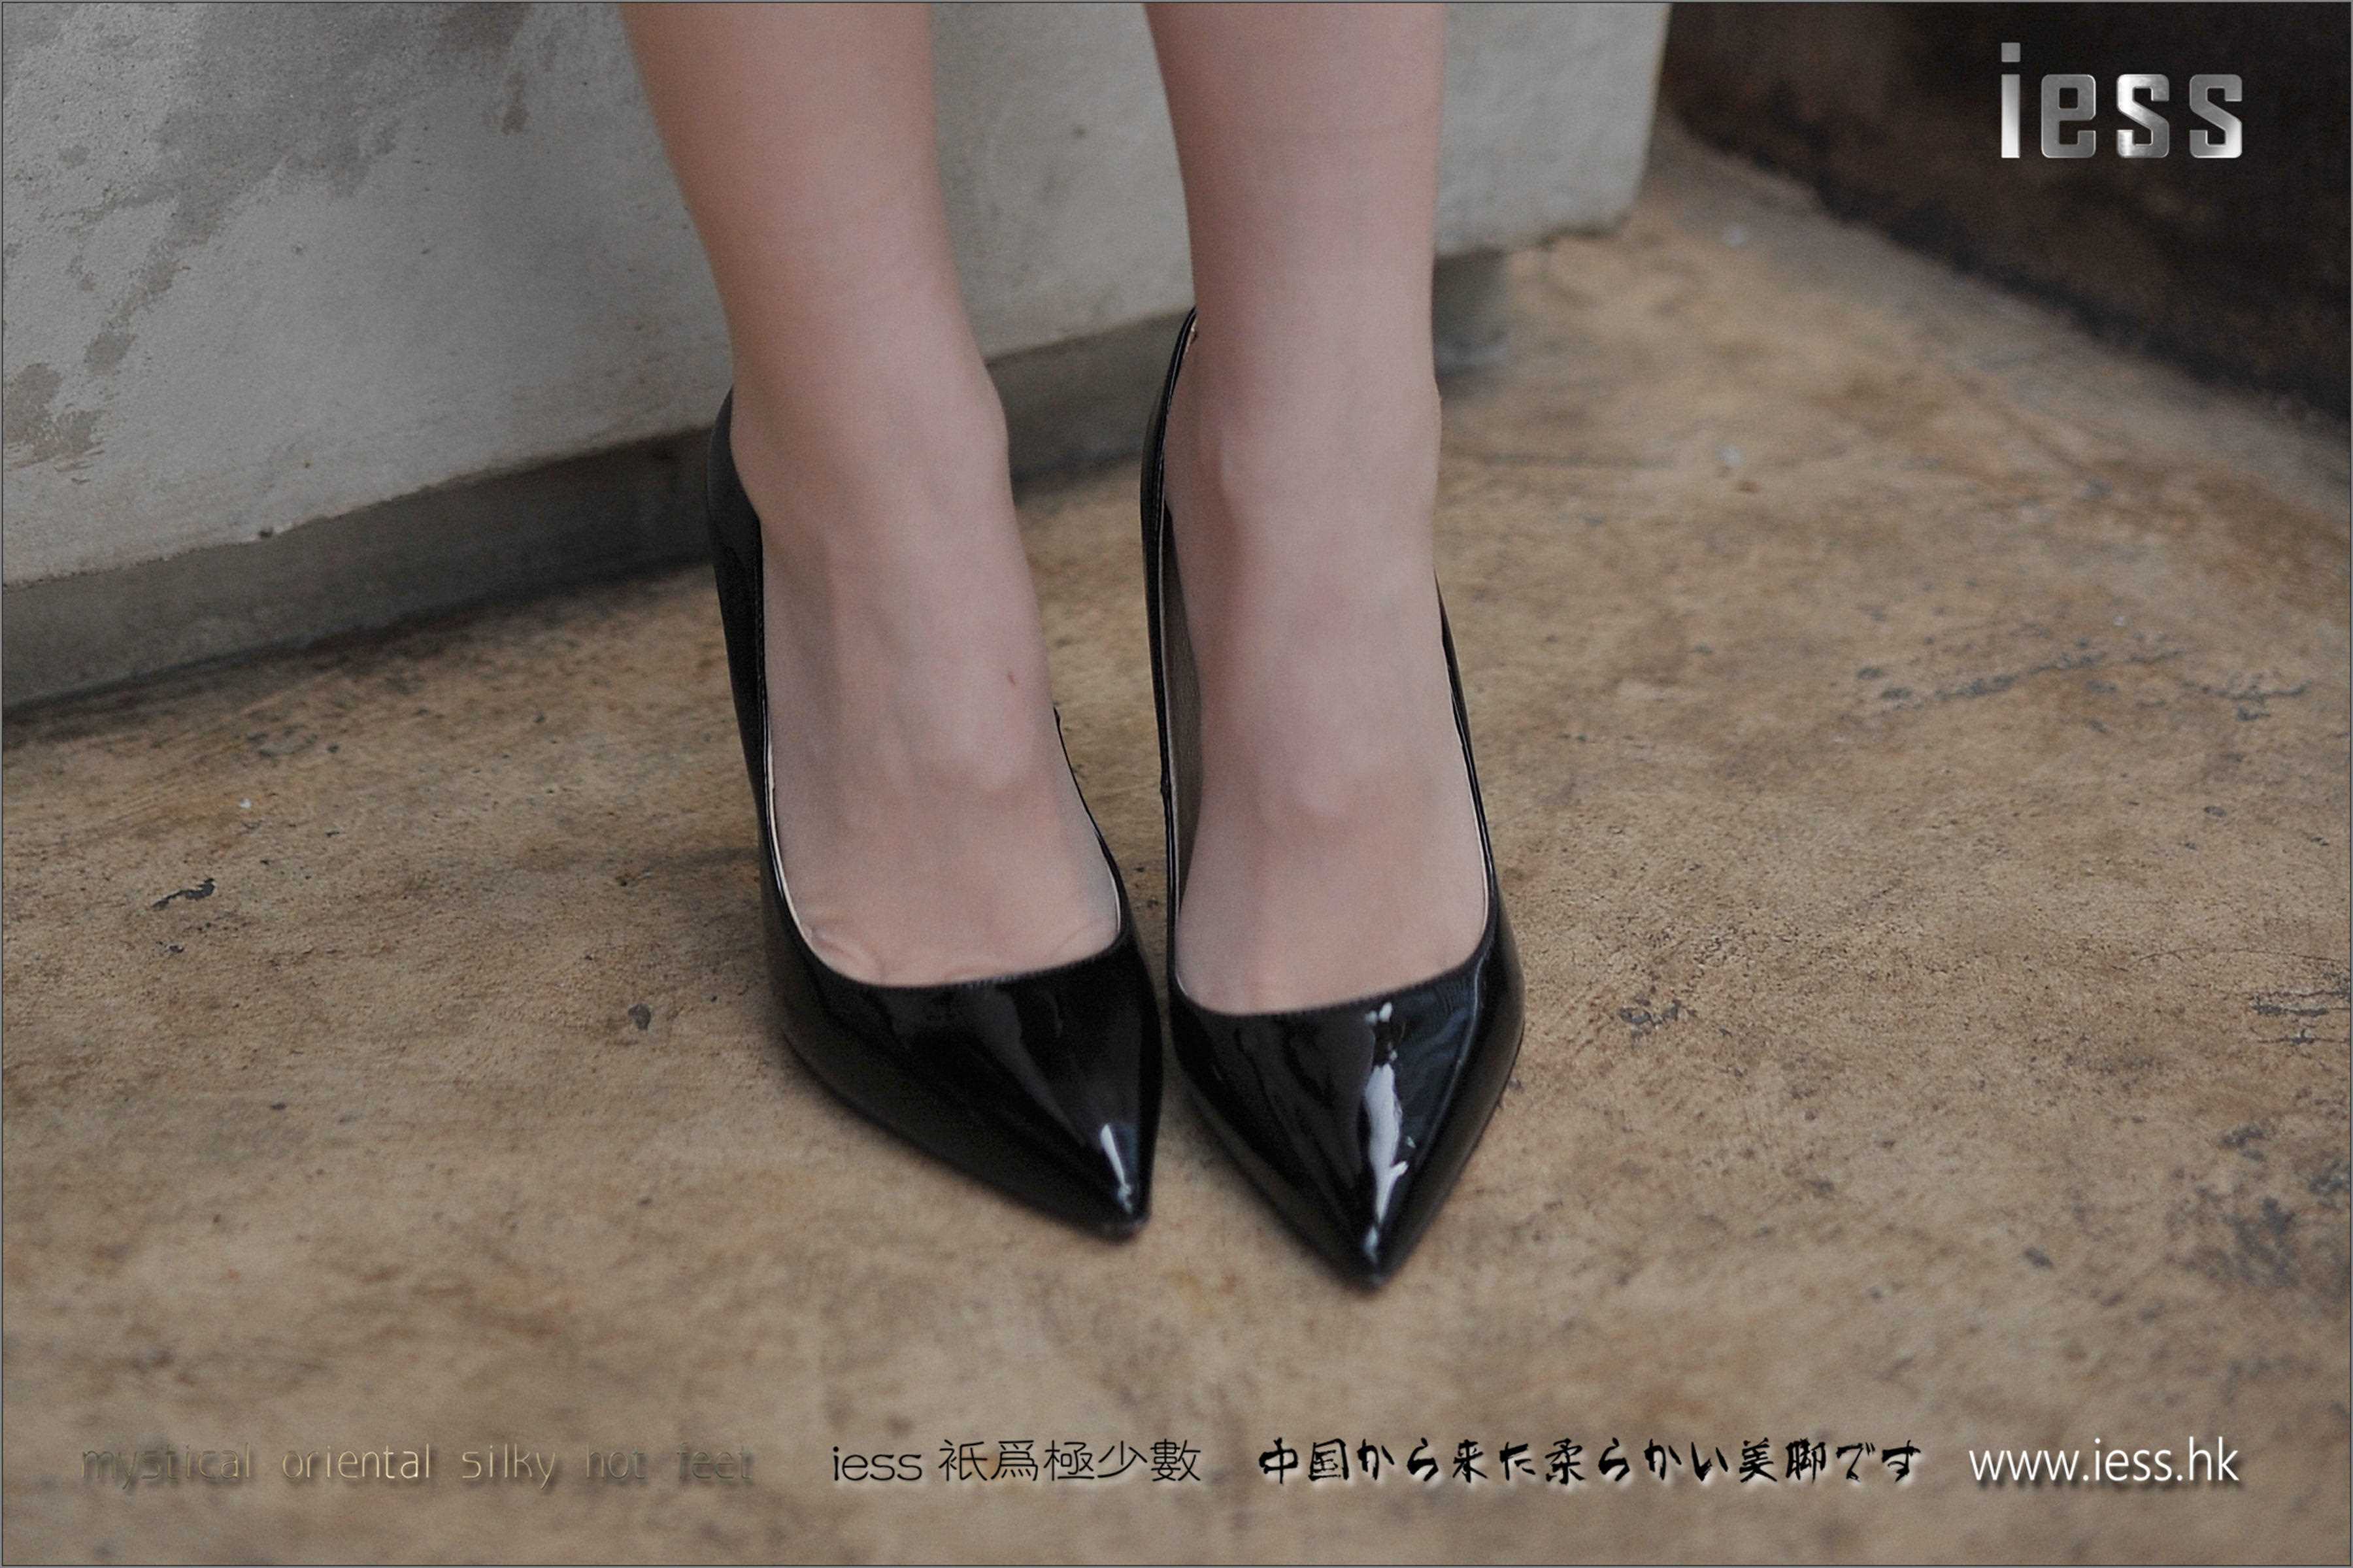 China Beauty Legs and feet 218